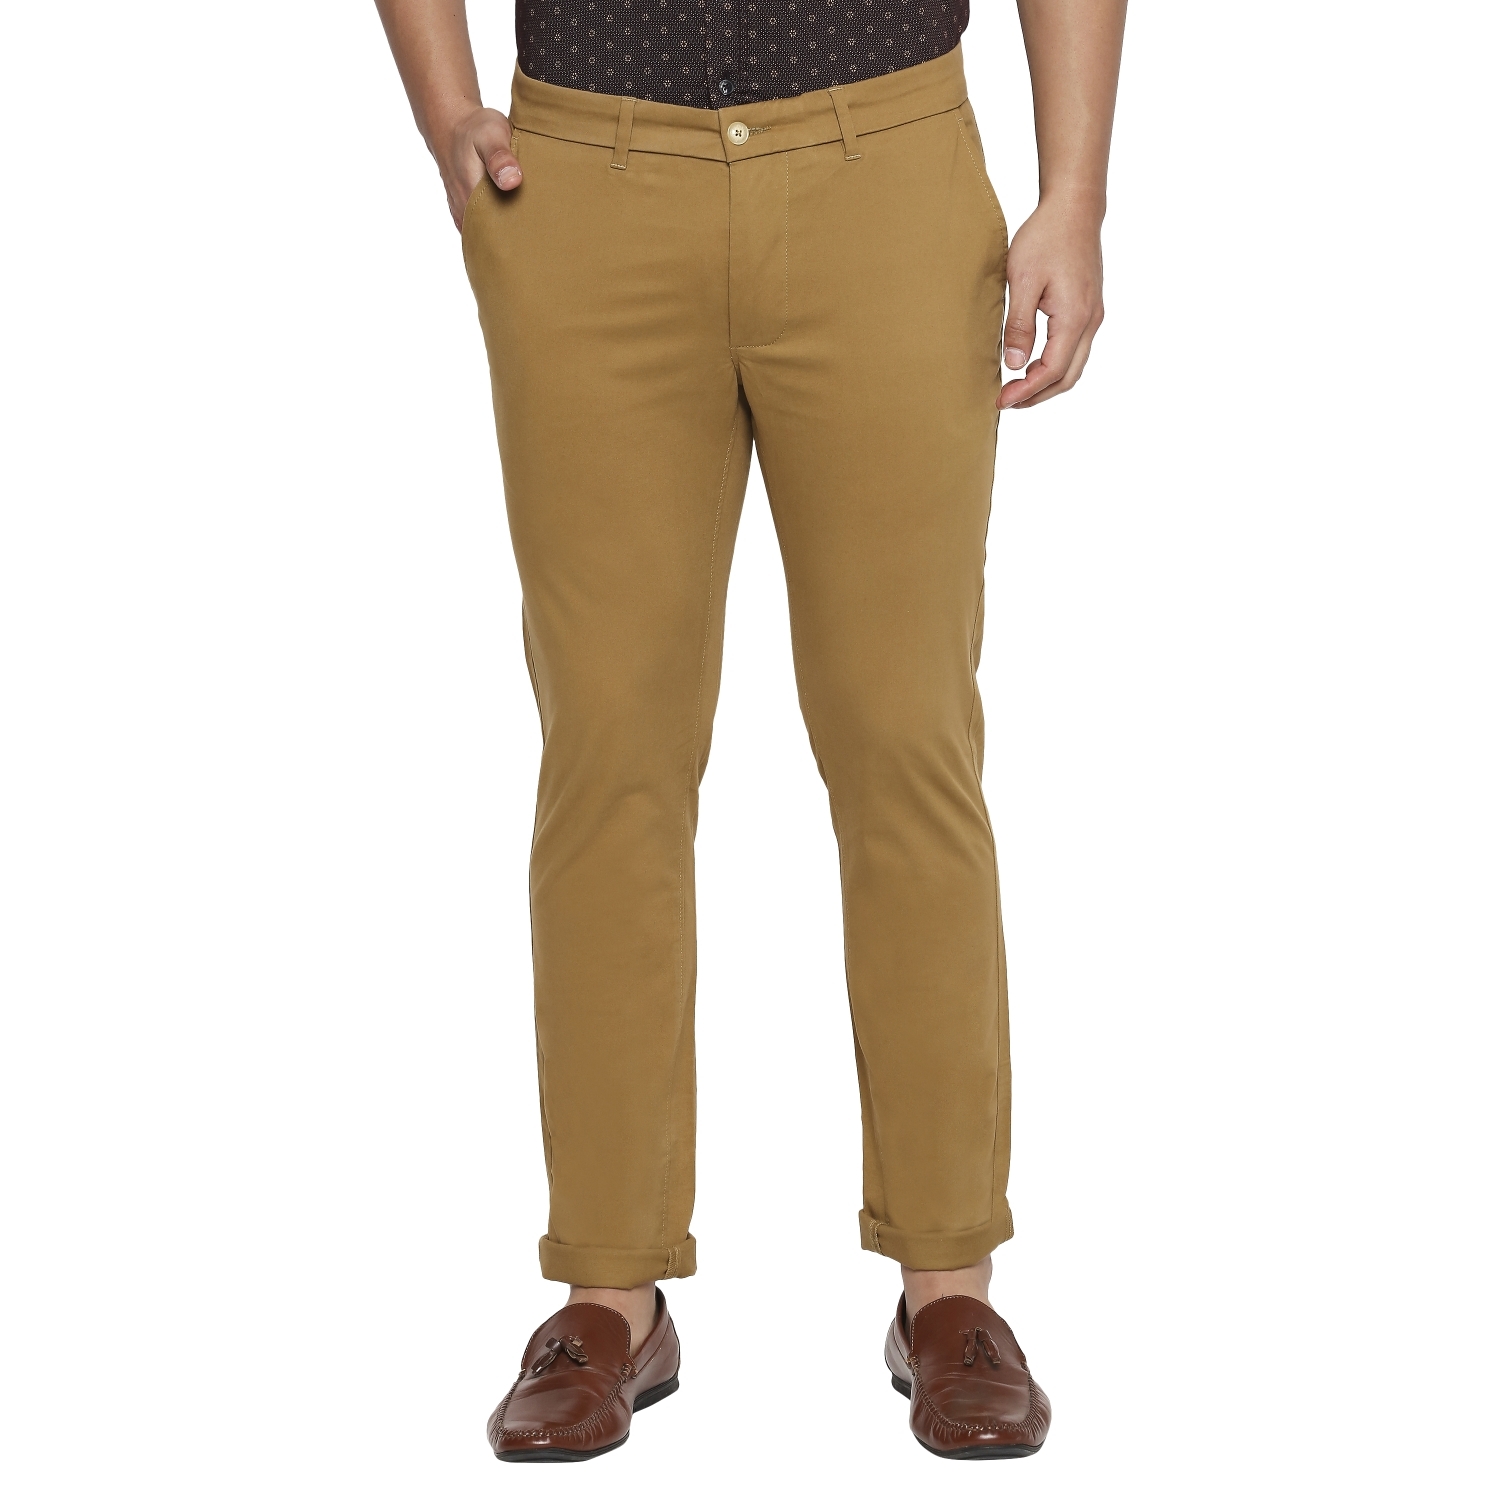 Basics | Men's Khaki Cotton Blend Solid Trouser 0